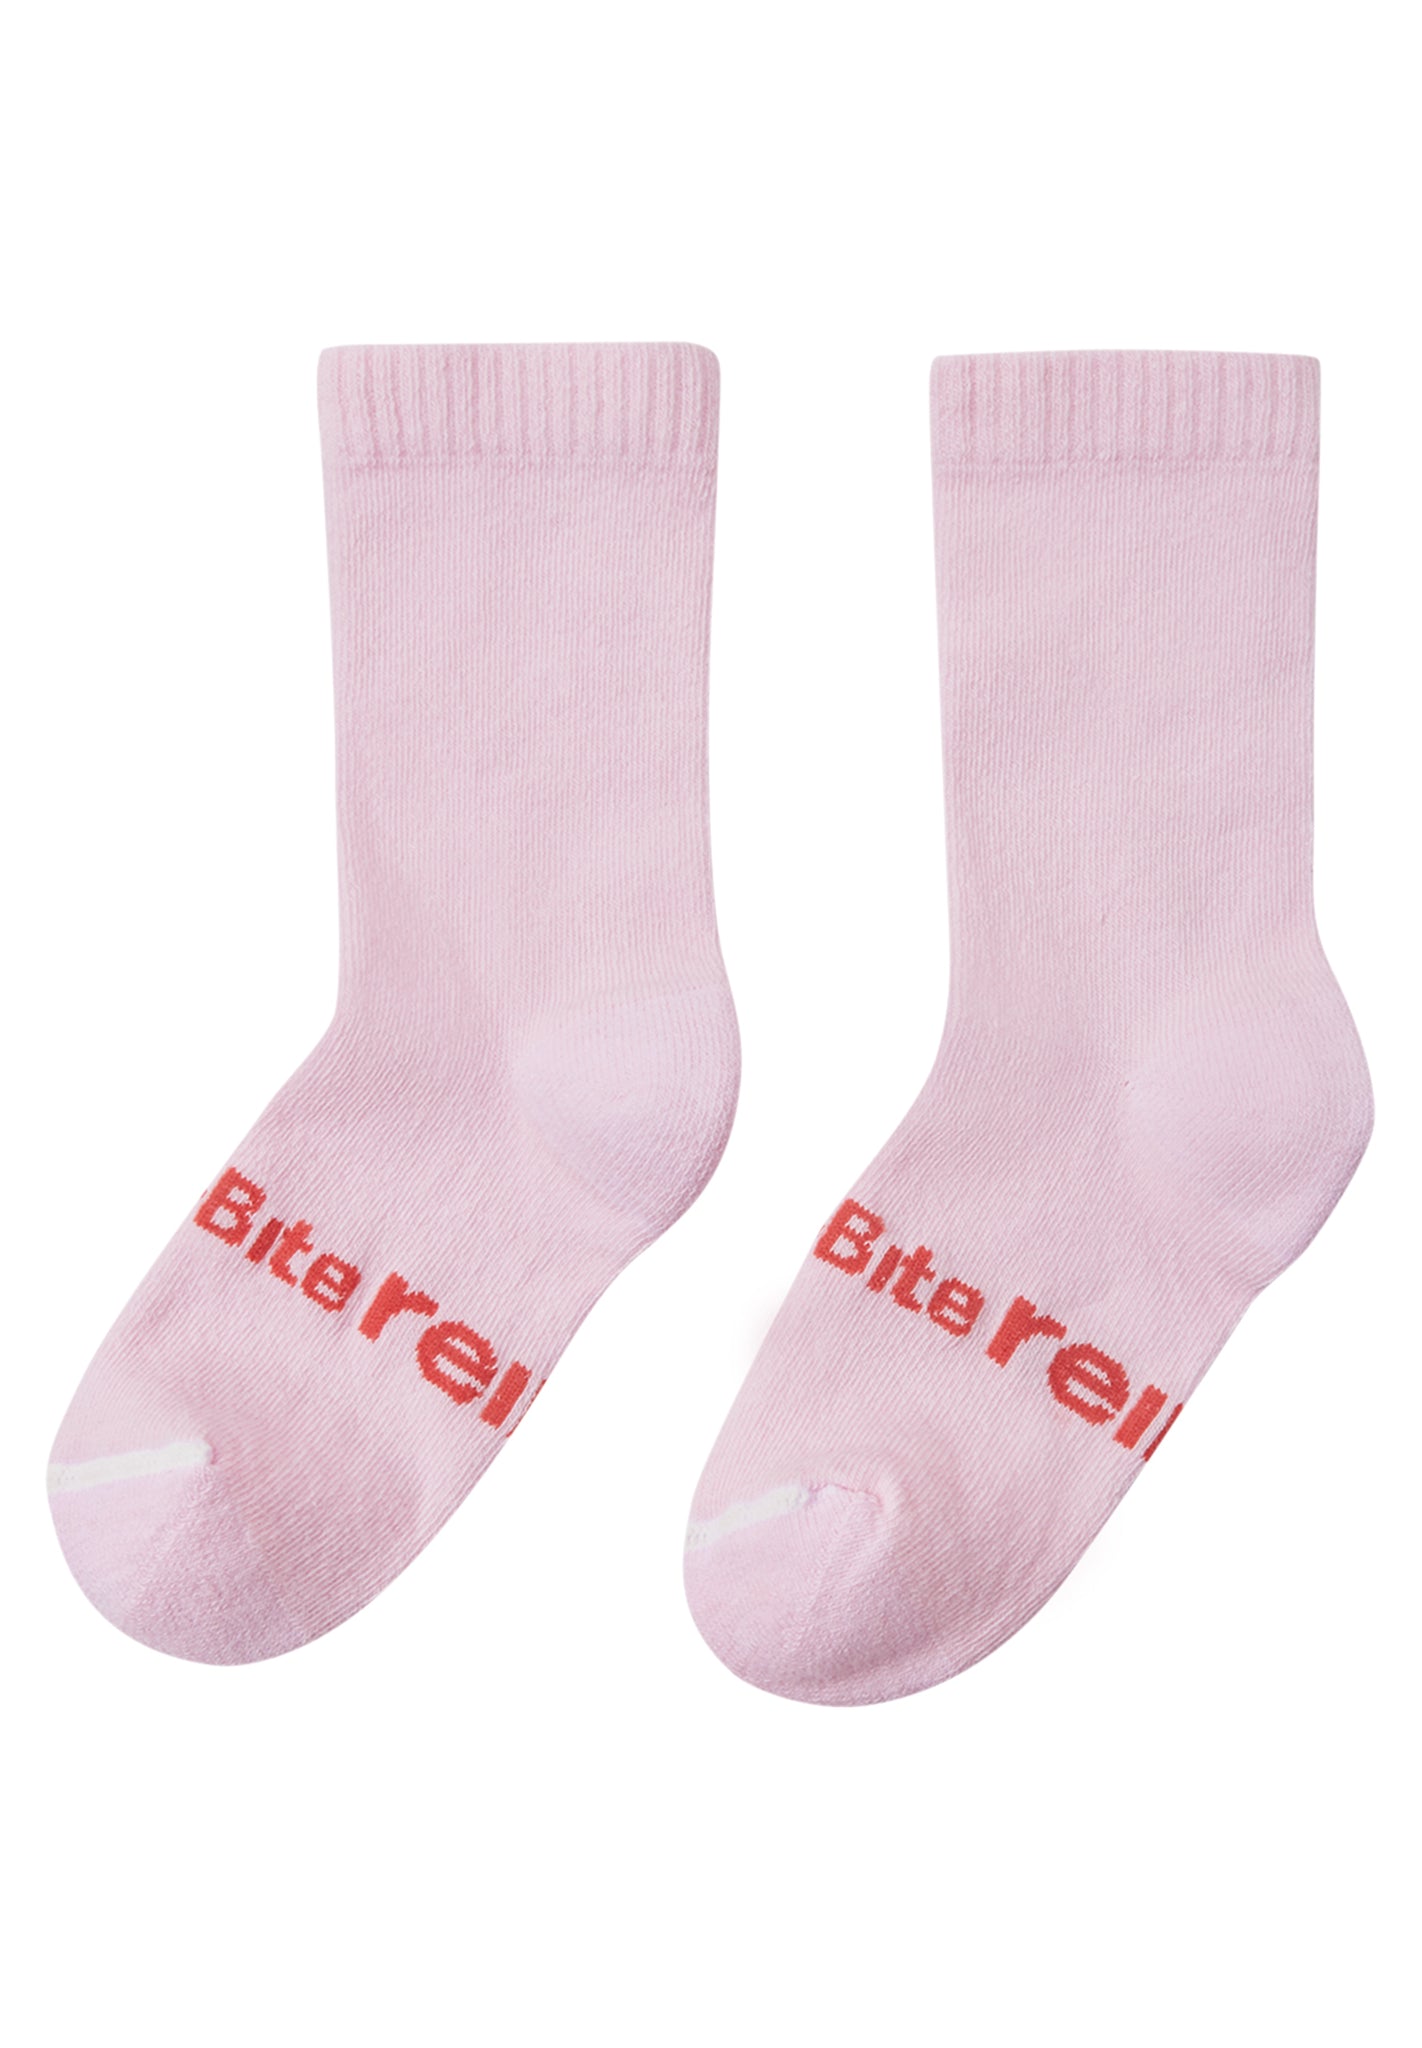 Ponožky Reima Anti-Bite - Repelent proti hmyzu